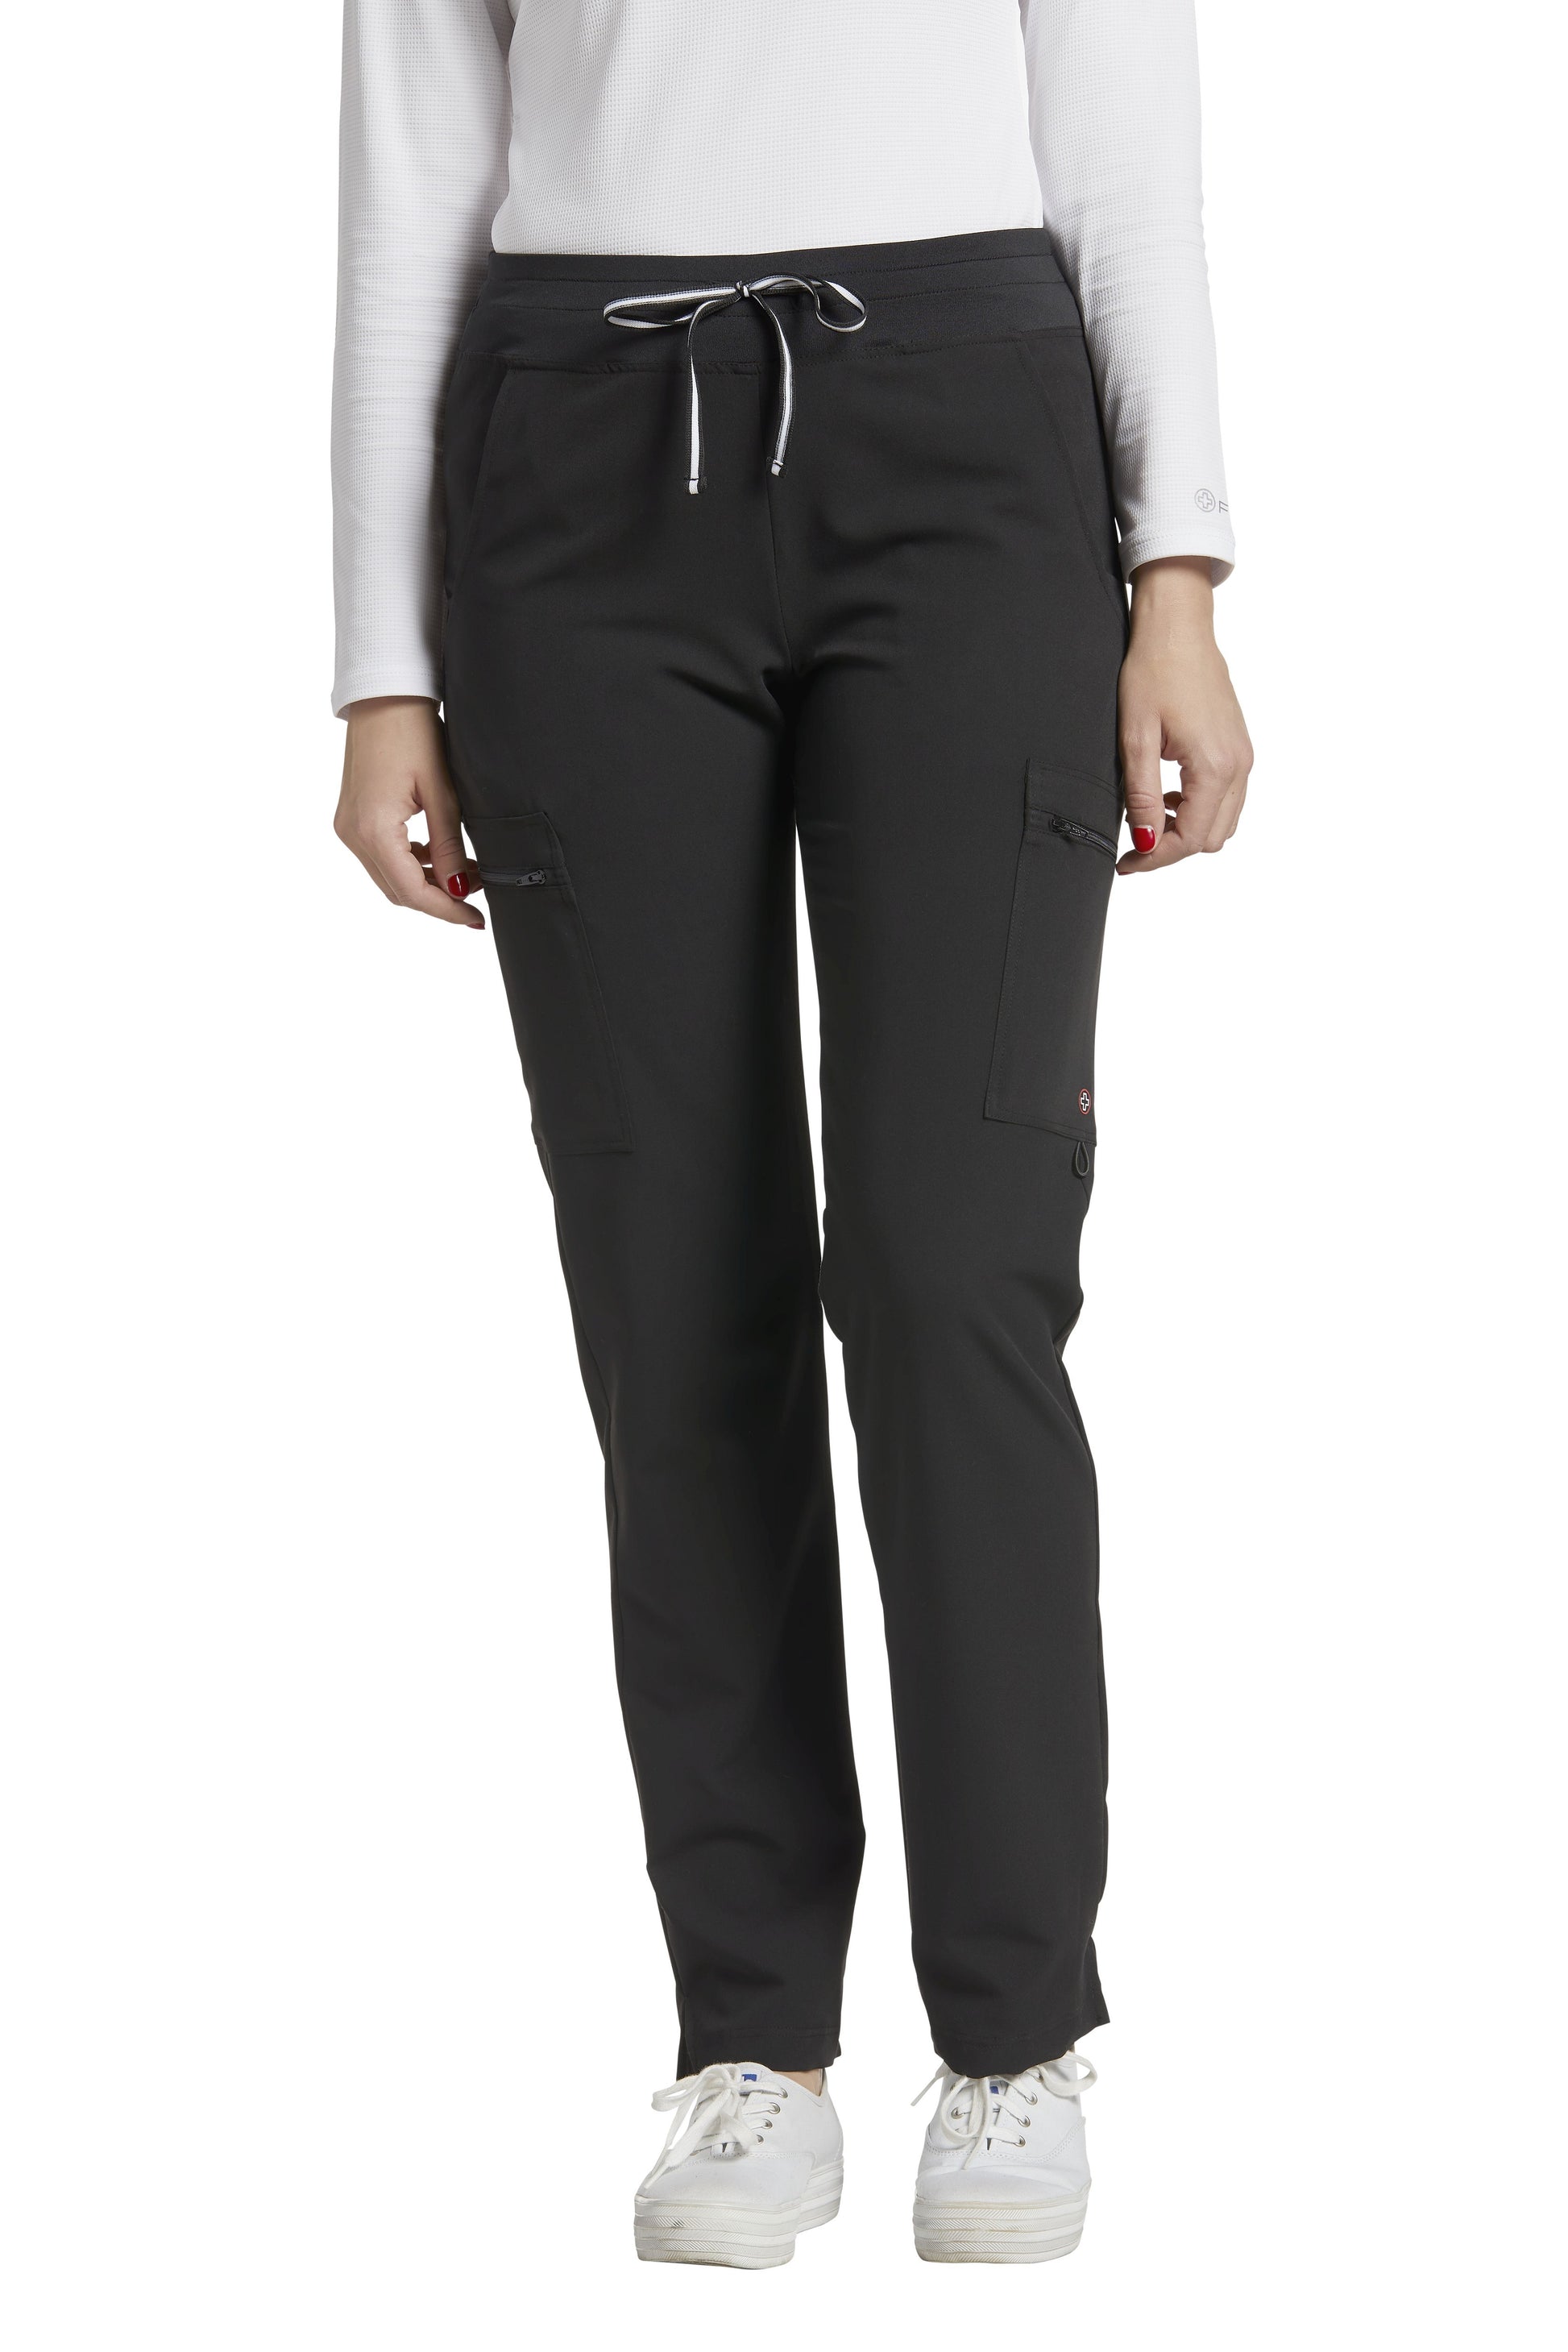 Pantalon de travail avec poches cargo V-Tess White Cross #337p noir